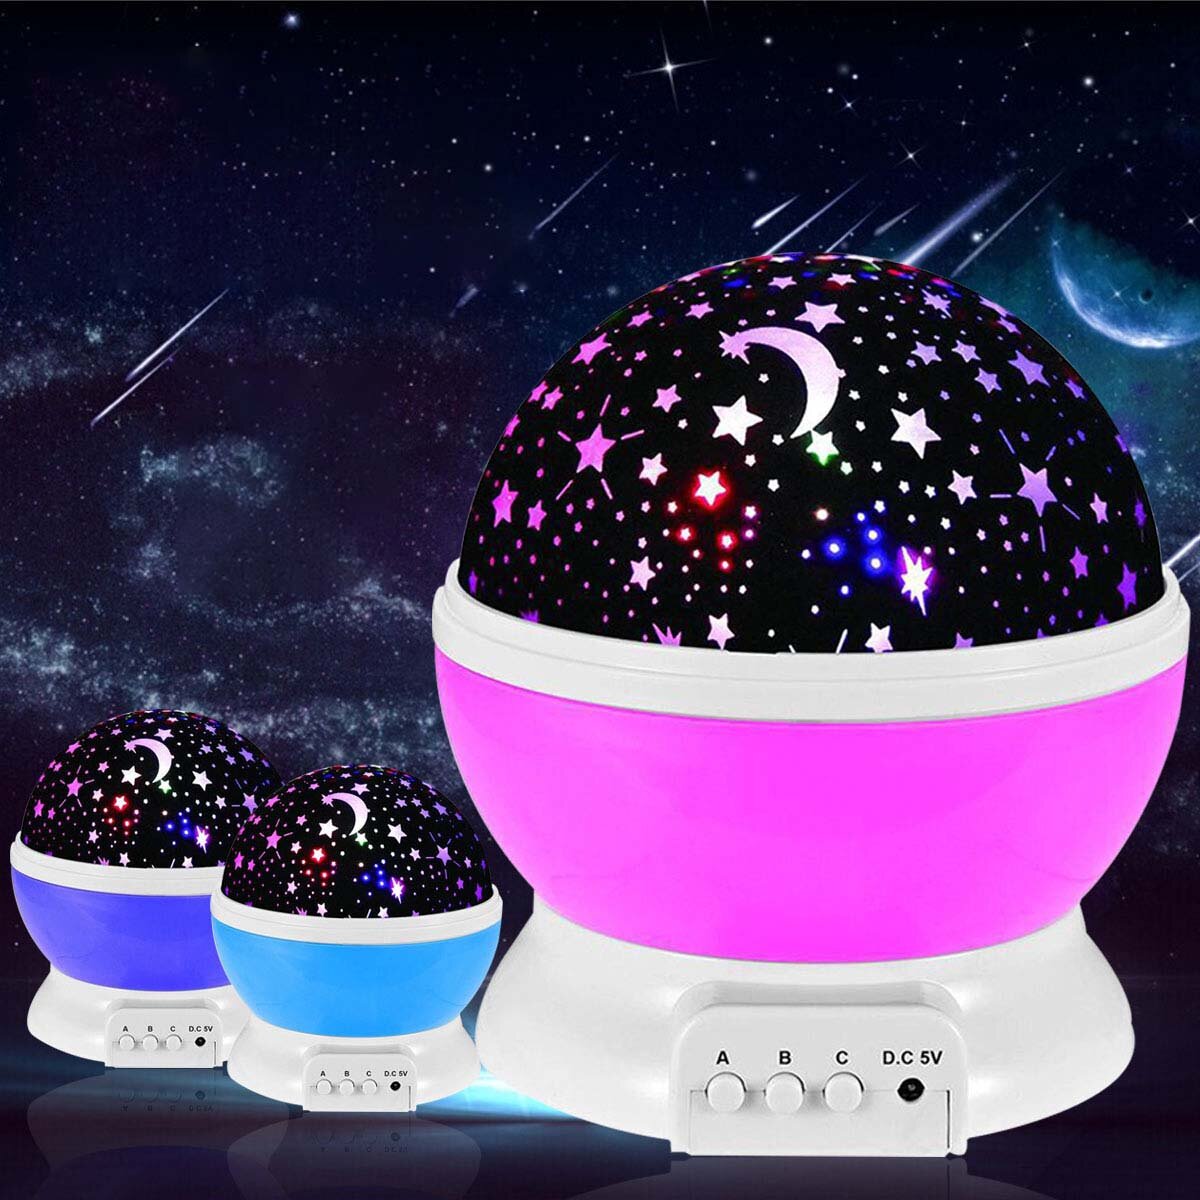 LED Starry Projector Lamp Baby Nachtlampje USB Romantische Roterende Maan Cosmos Sky Ster Projectiel